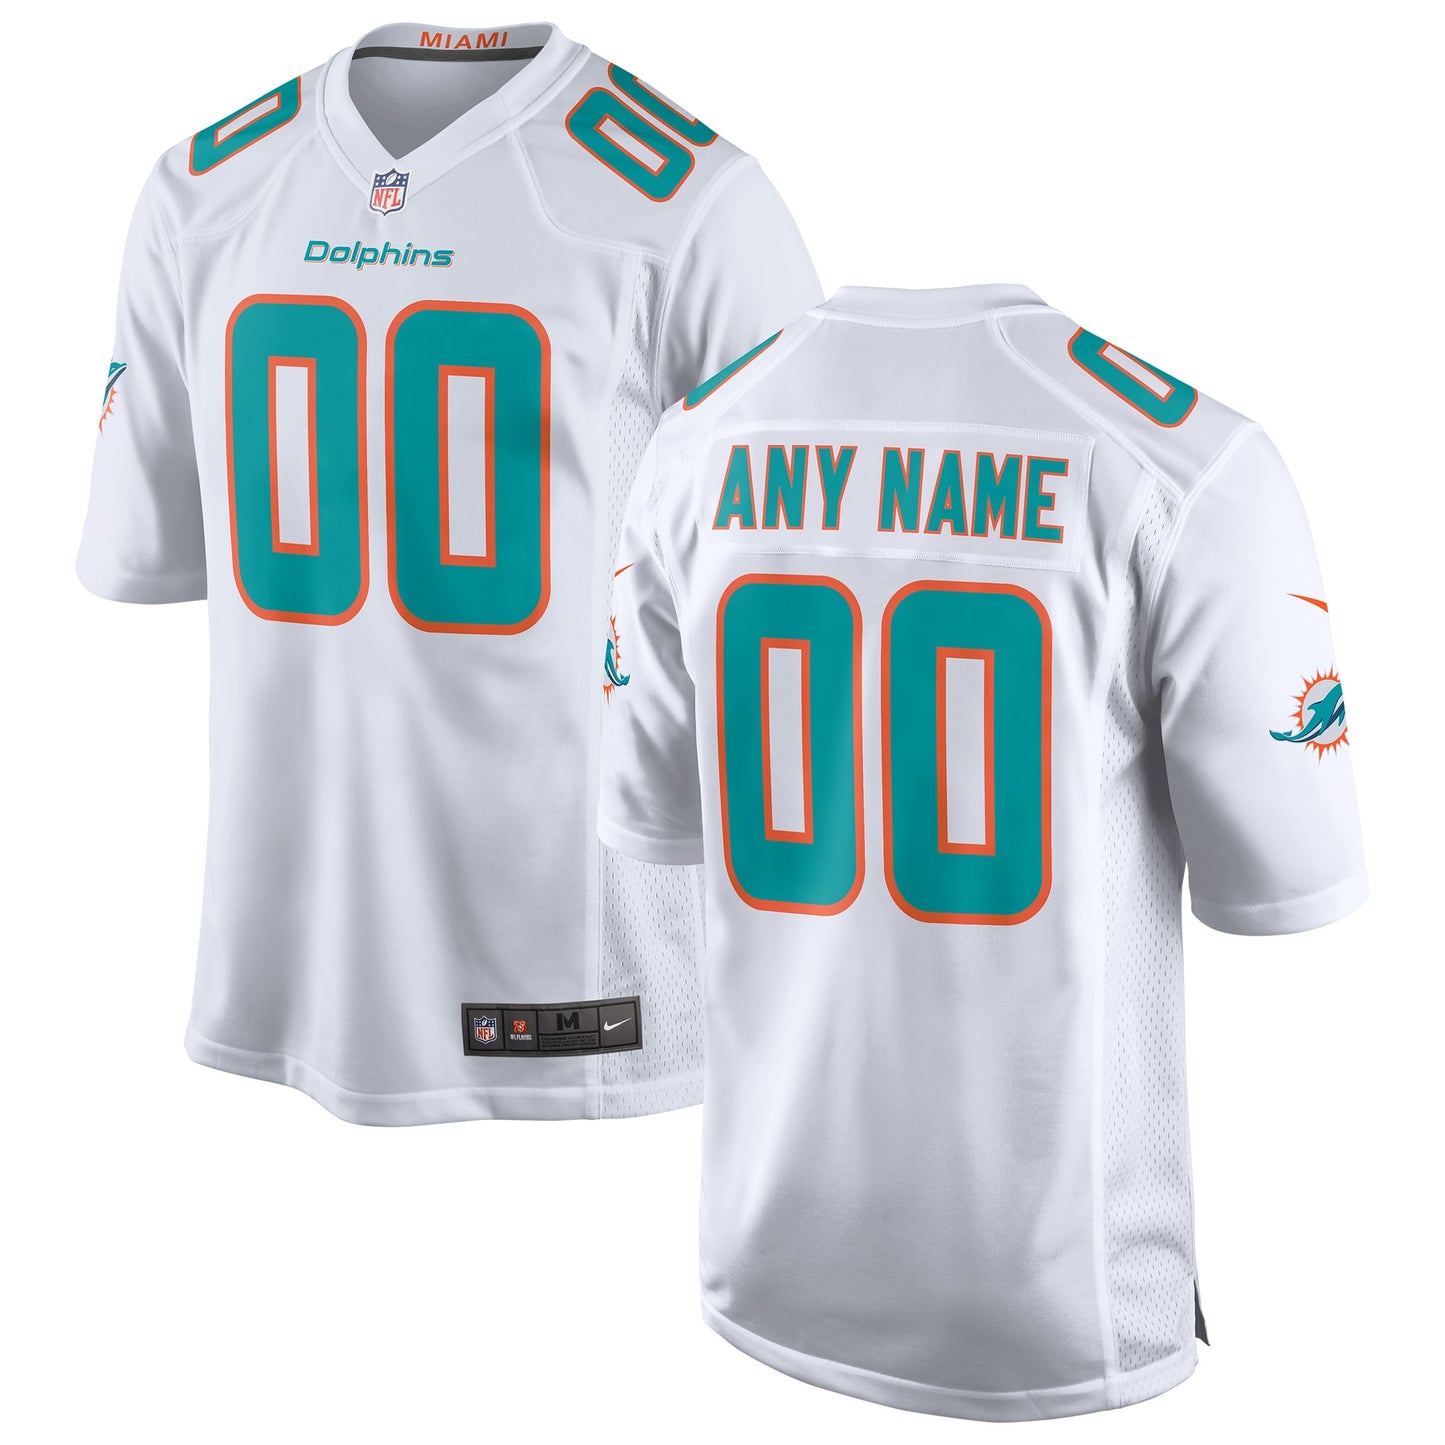 Miami Dolphins Nike Custom Game Jersey - White